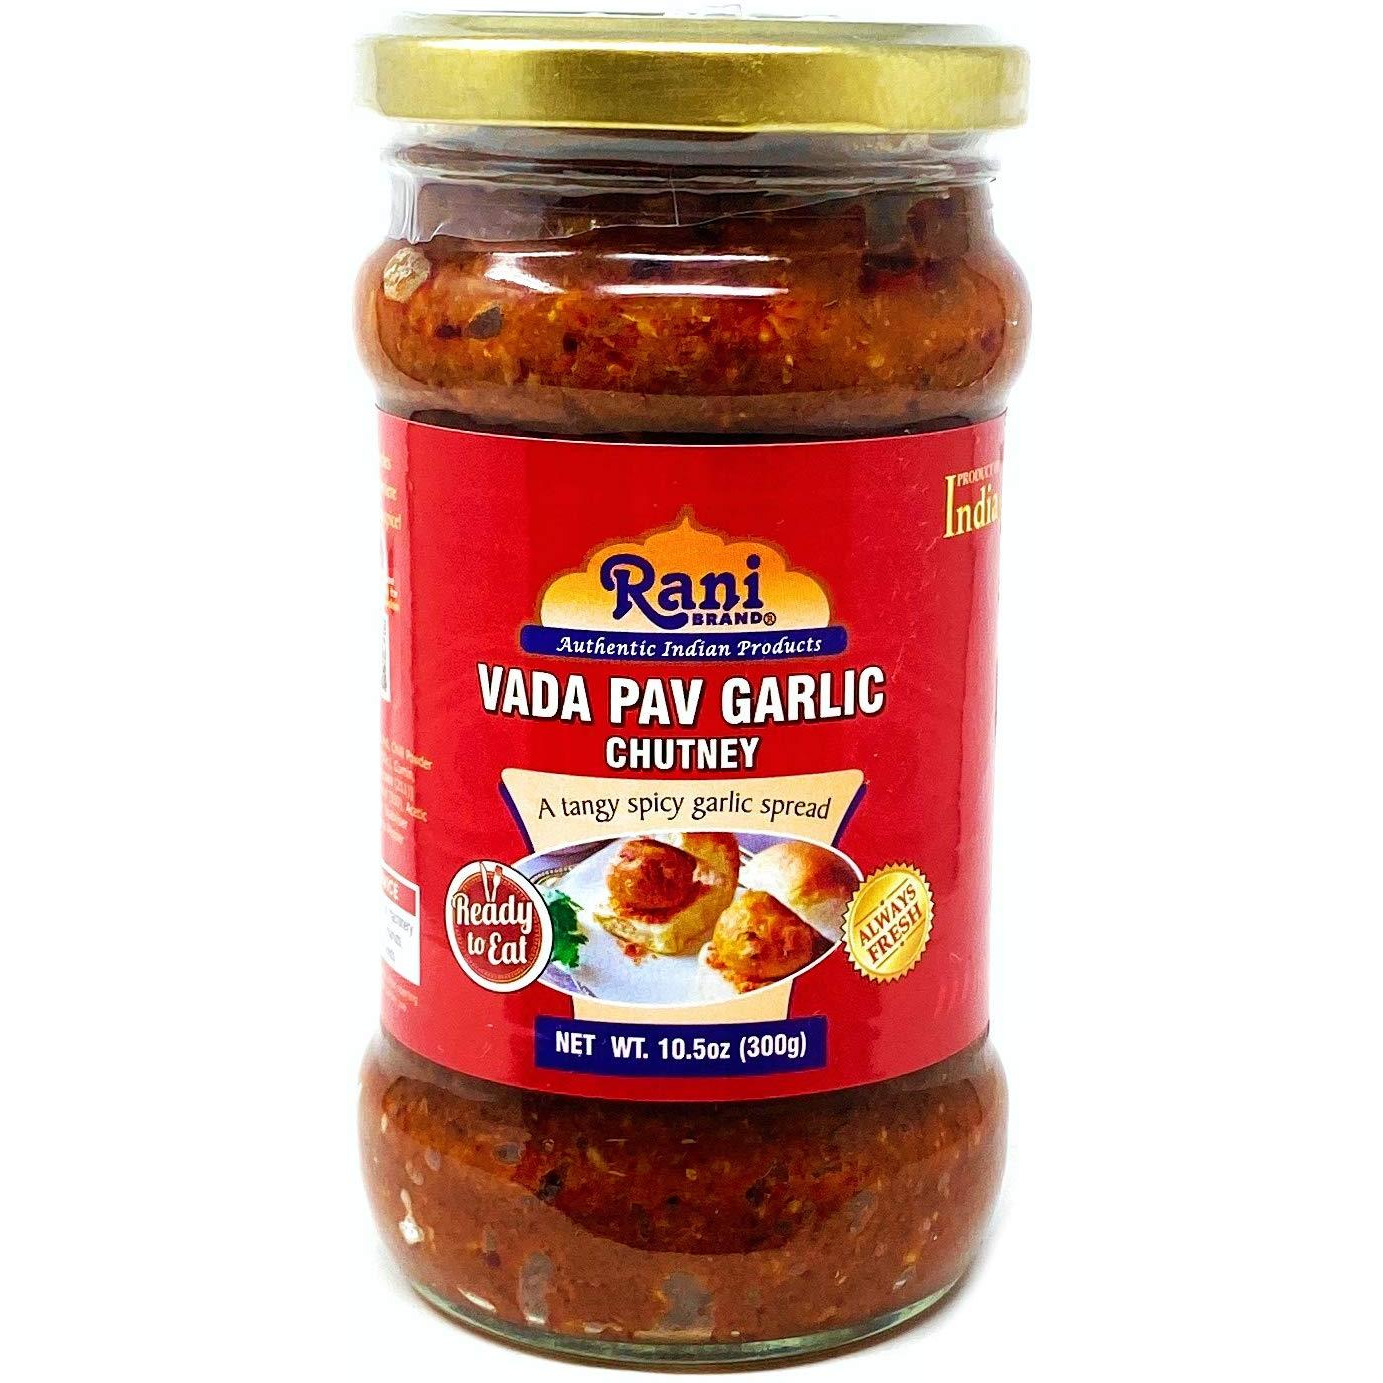 Rani Vada Pav Garlic Chutney Glass Jar, Ready to eat 10.5oz (300g) Vegan ~ Gluten Friendly | NON-GMO | No Colors | Indian Origin